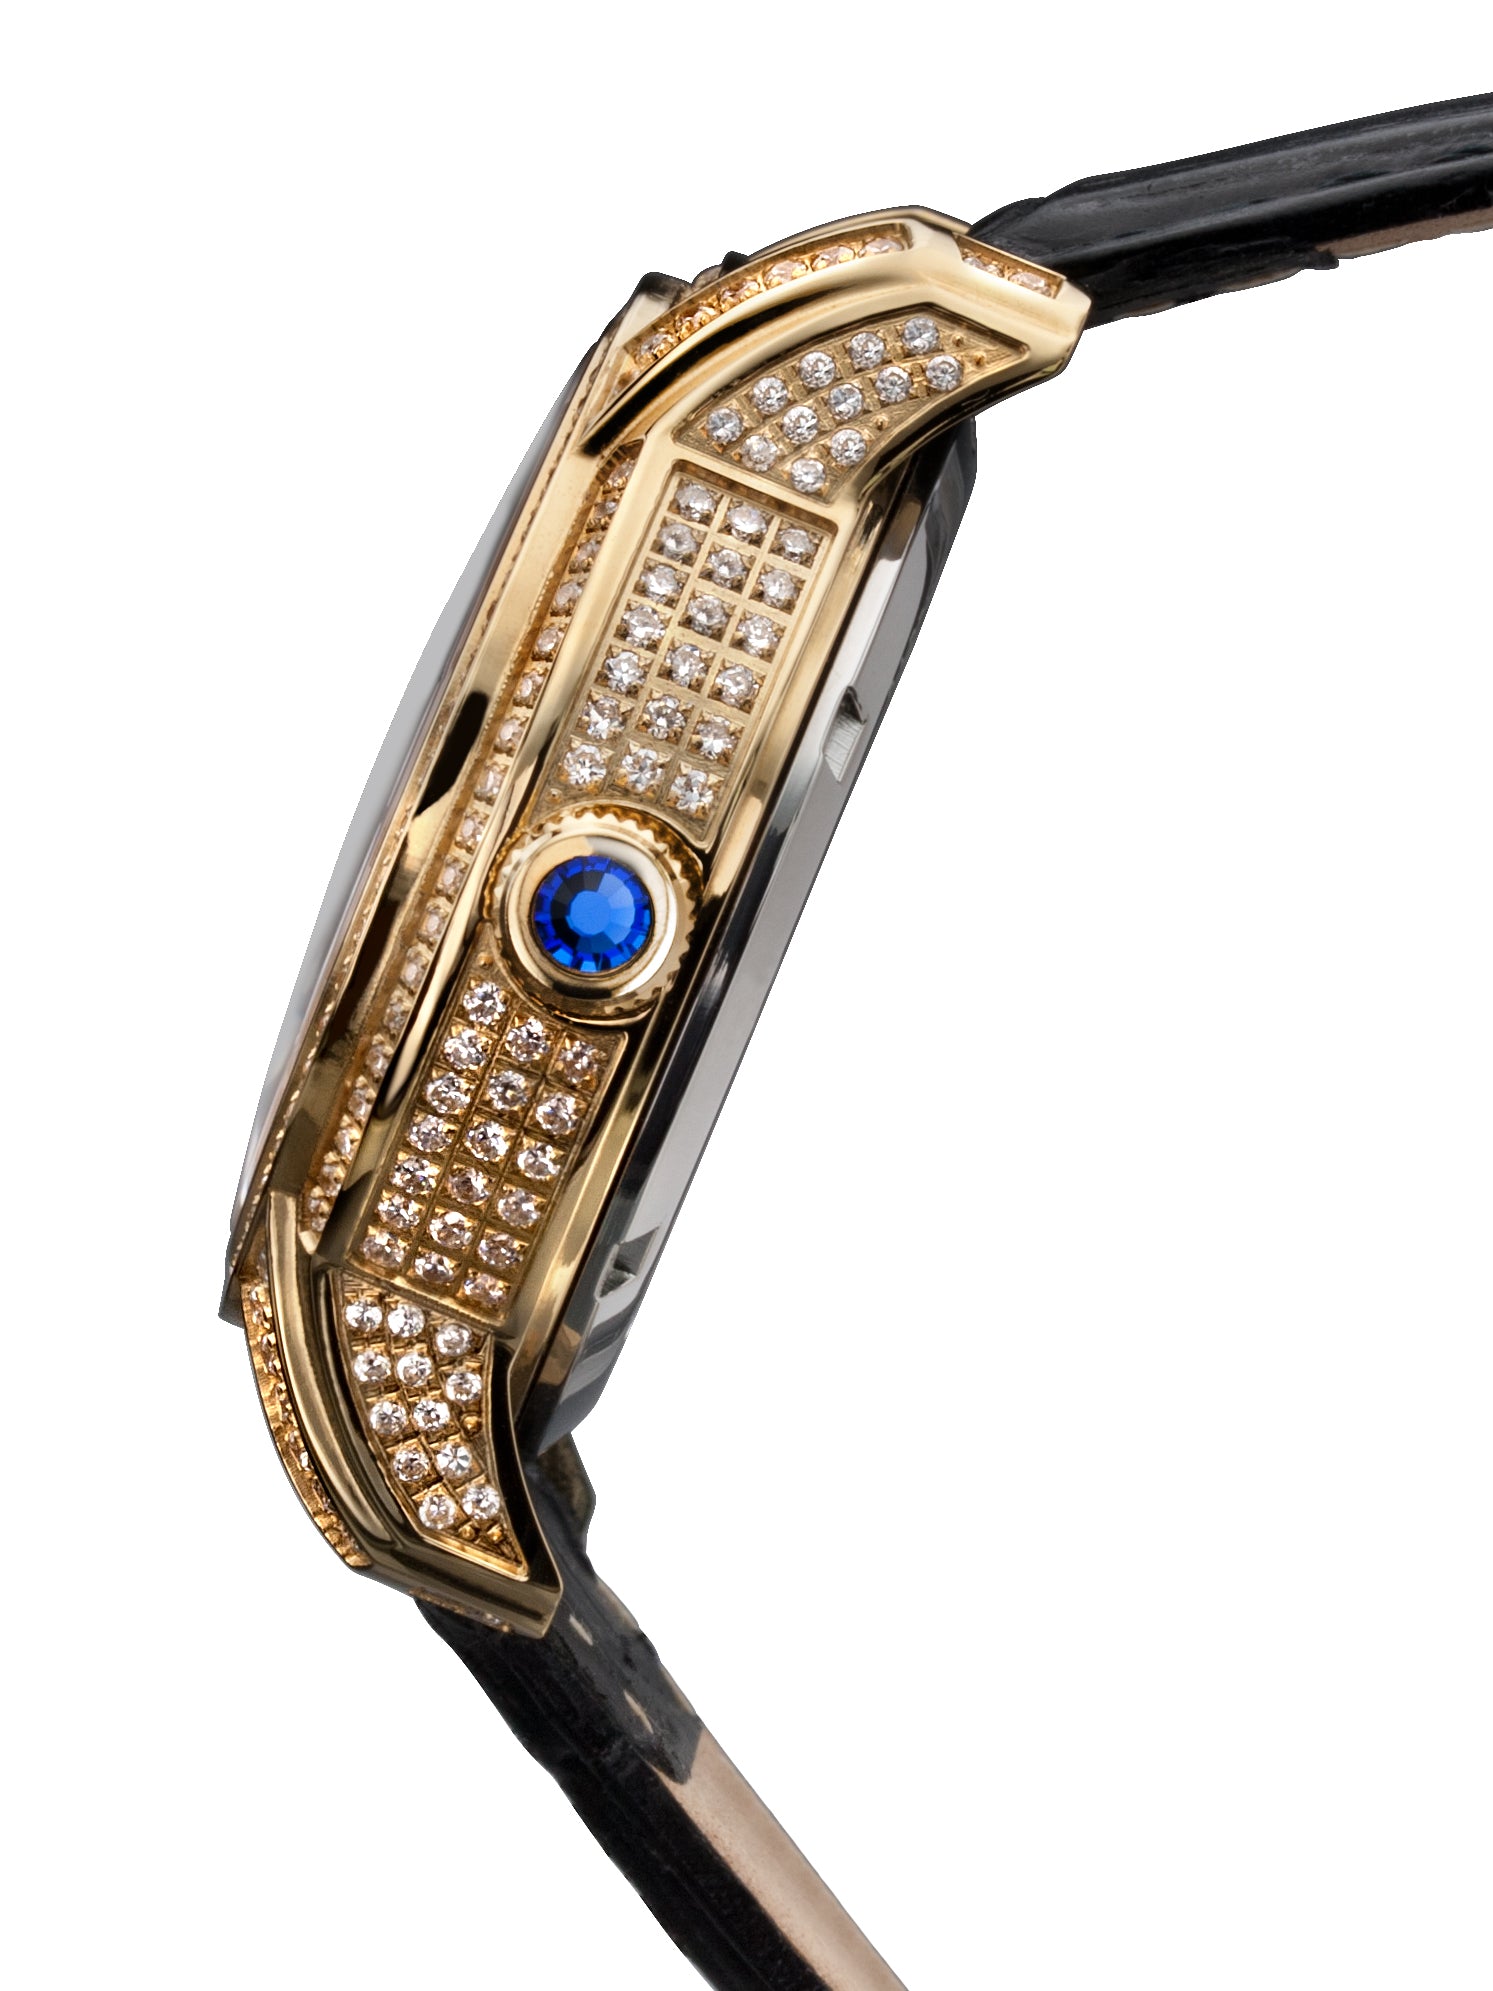 Automatic watches — Duchess II — Hindenberg — gold black